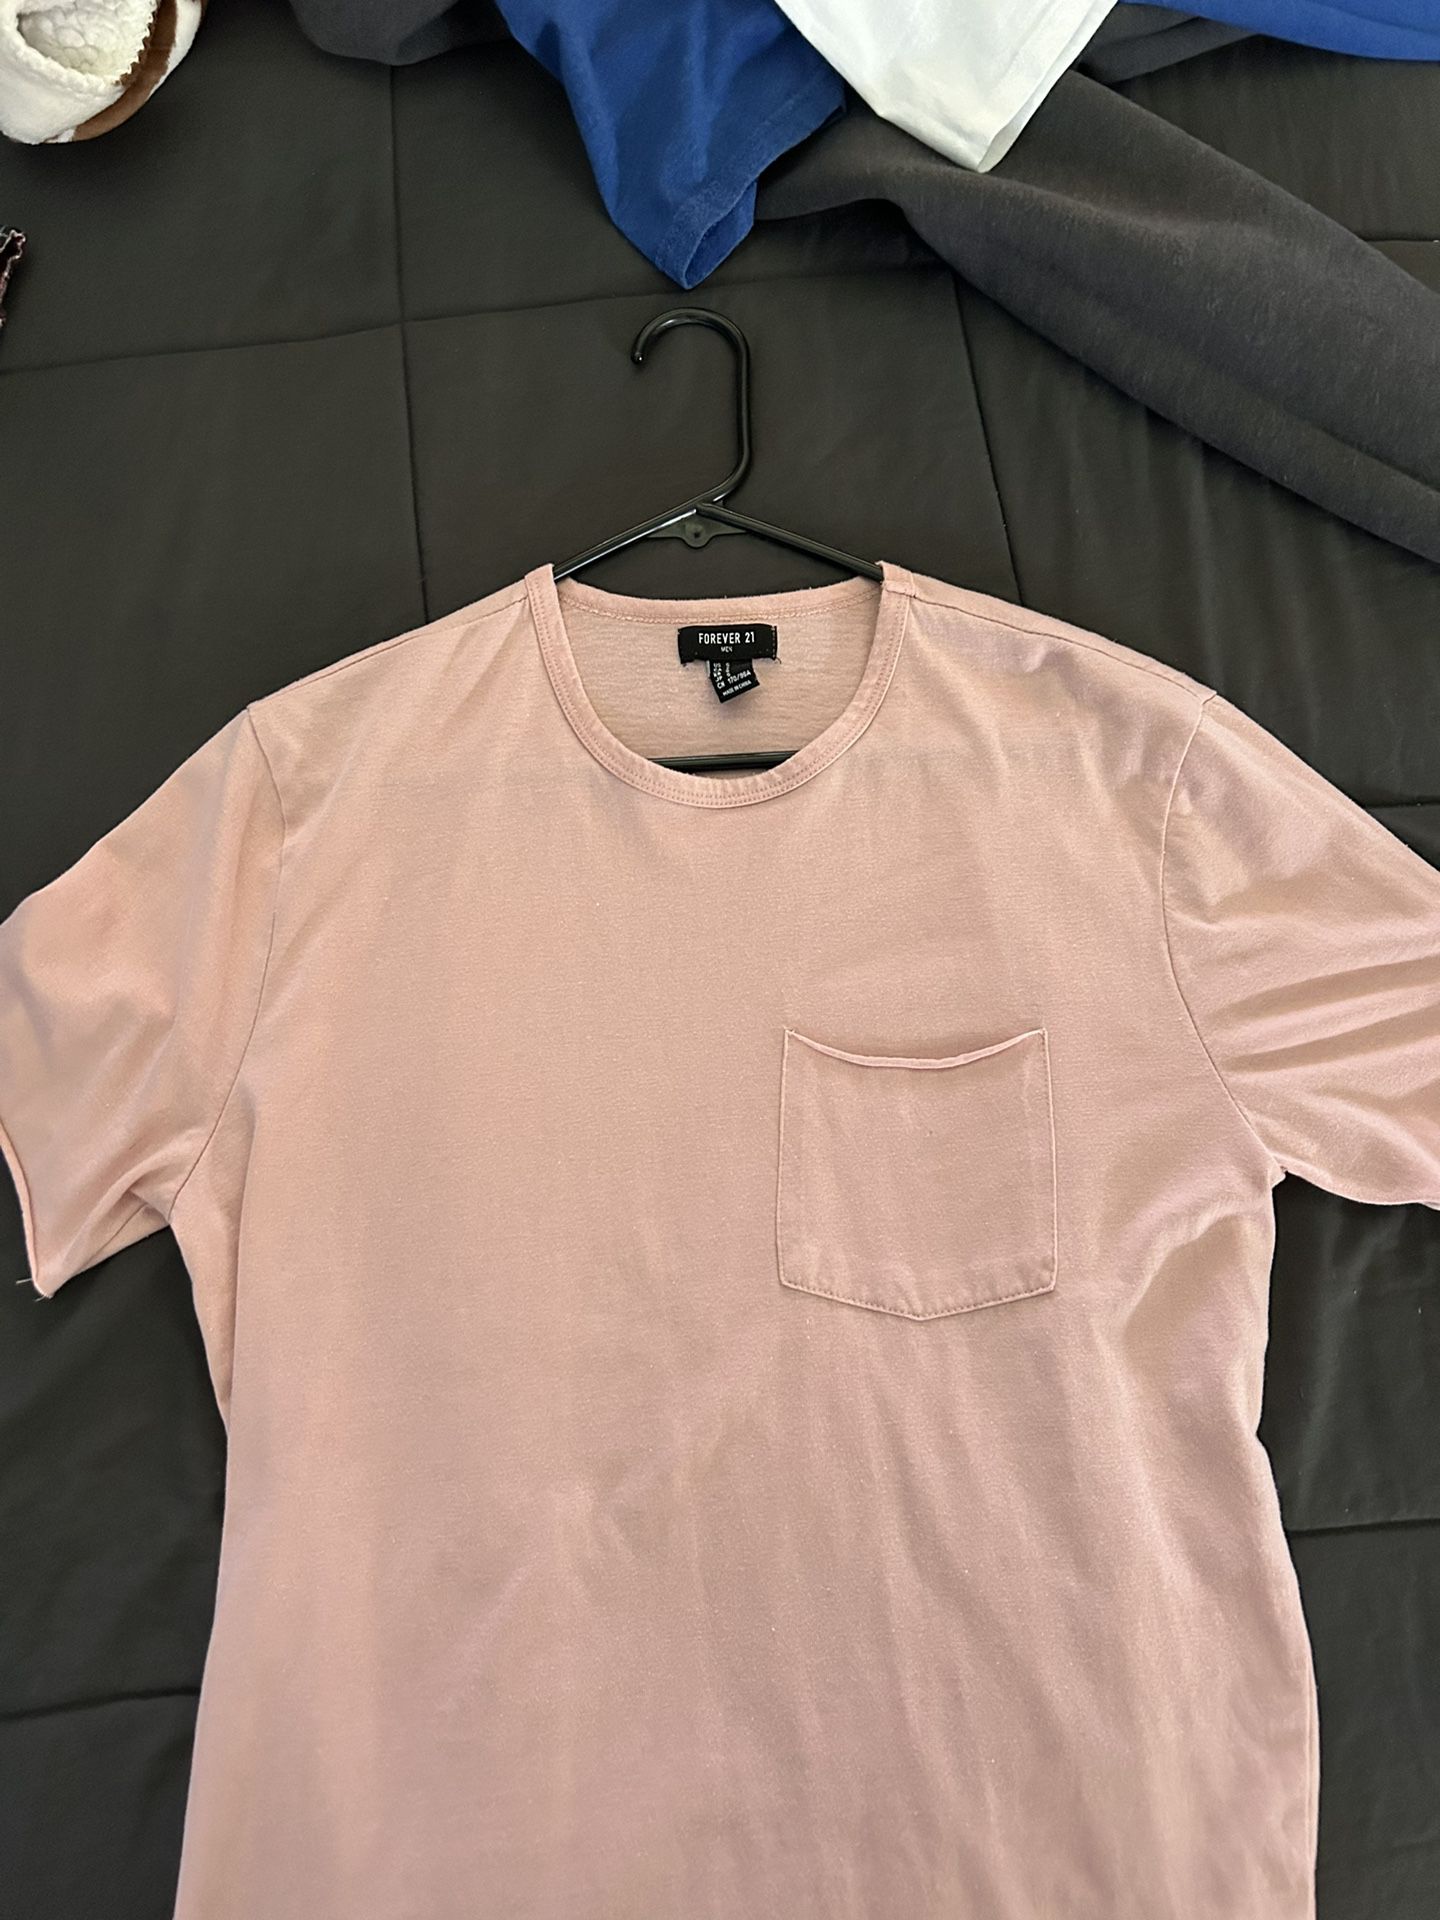 Pinkish Mens Forever 21 T-Shirt